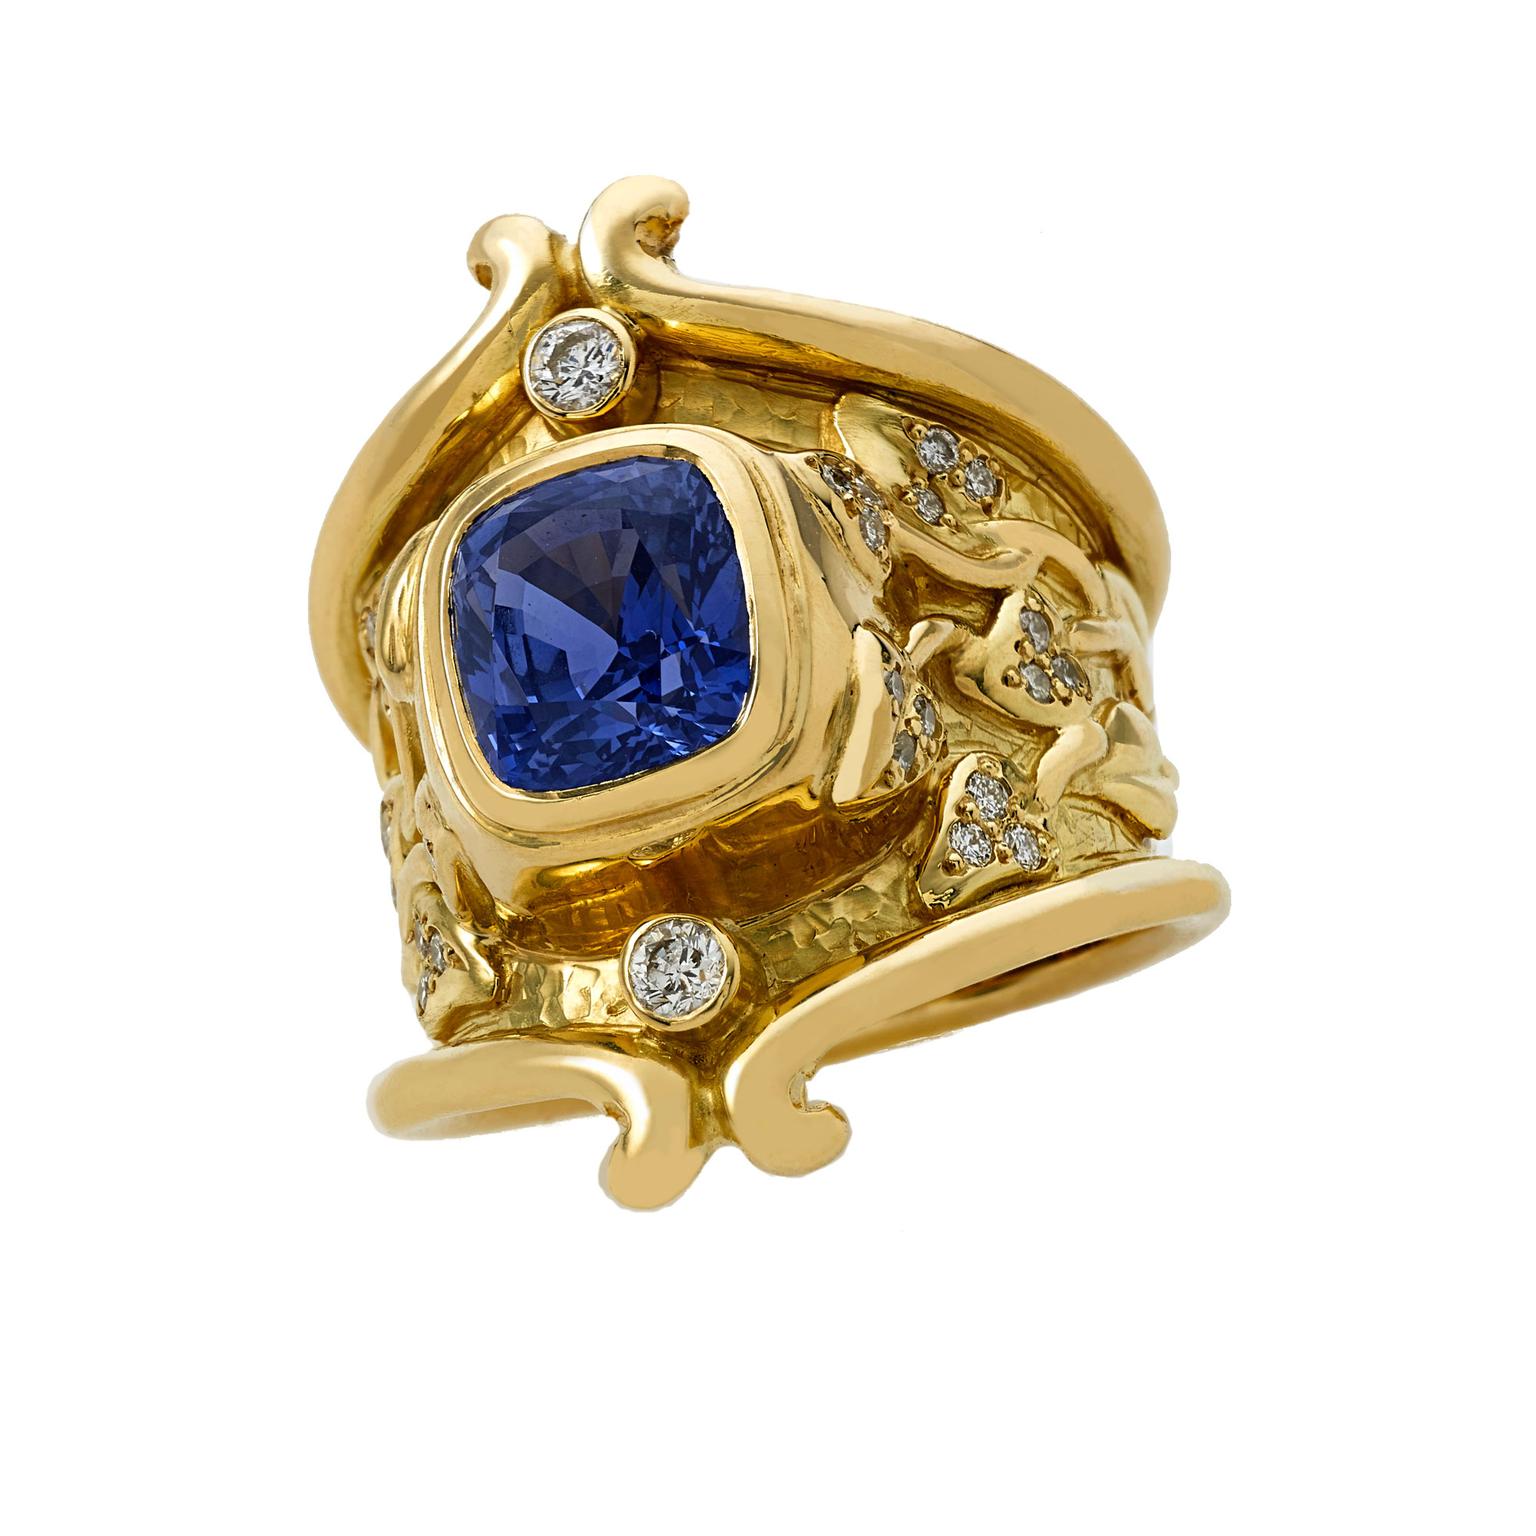 Elizabeth Gage sapphire and diamond ring